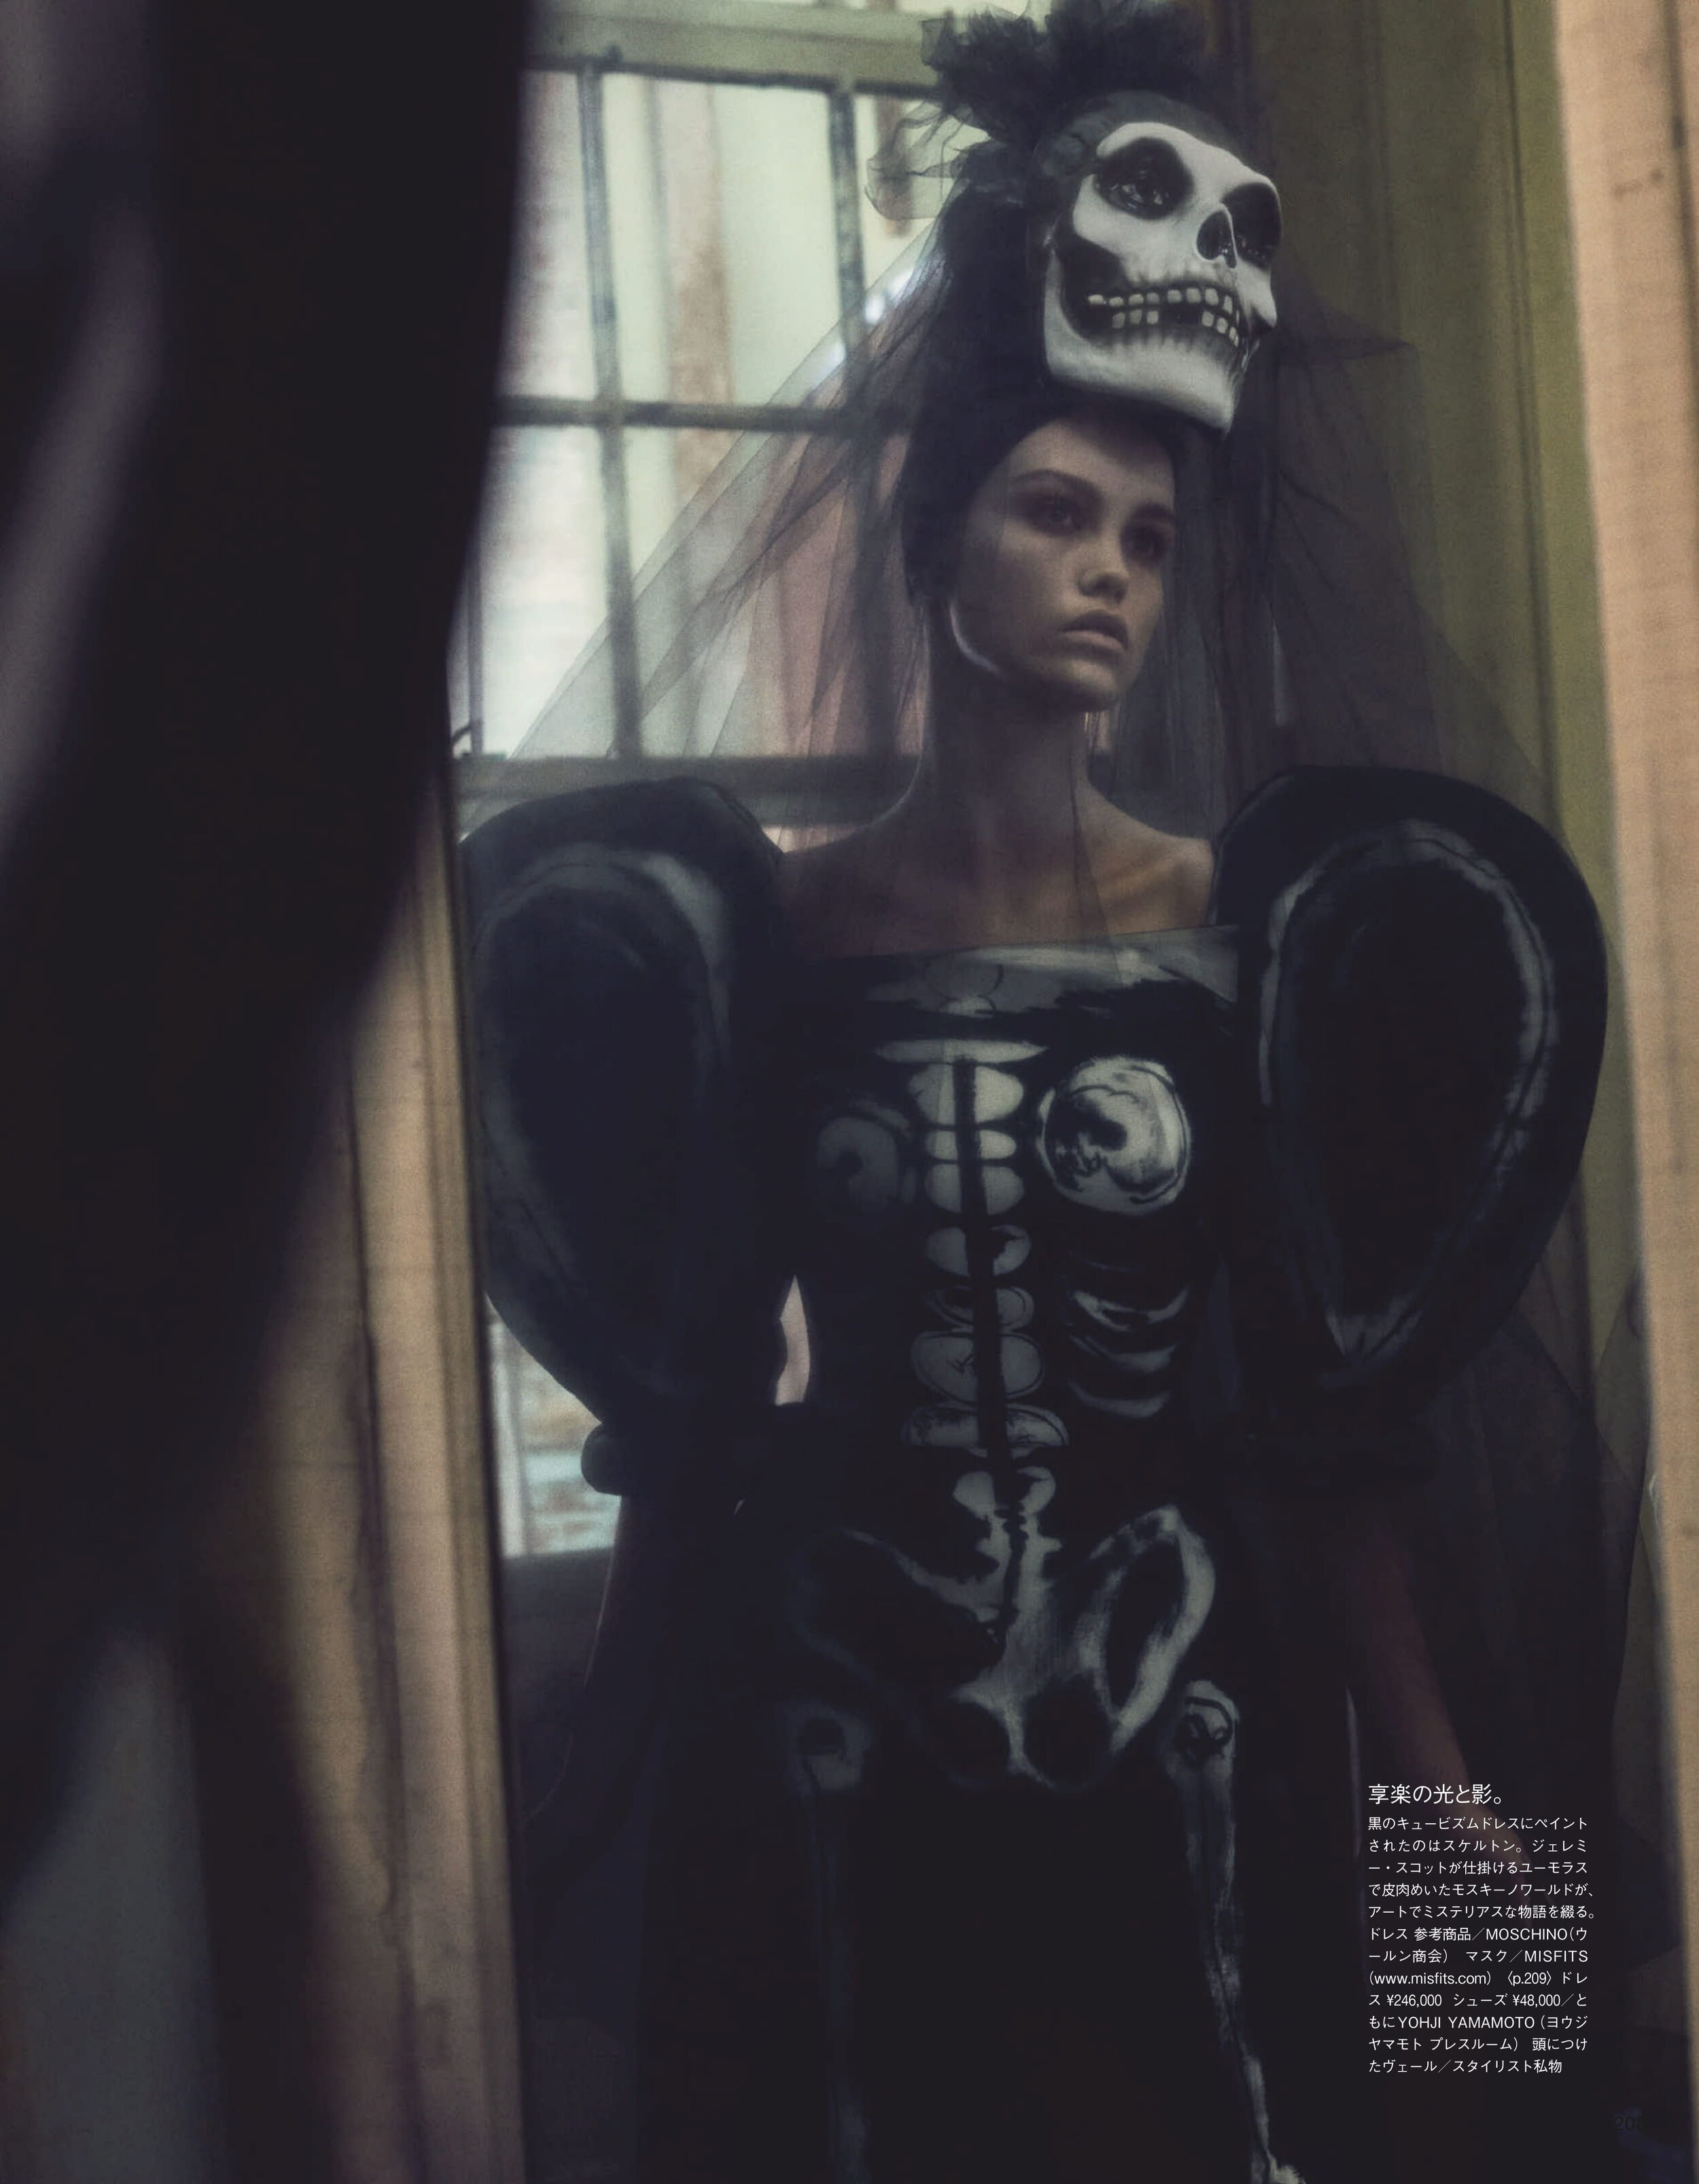 Luna Bijl by Zoey Grossman for Vogue Japan June 2020 (3).jpg